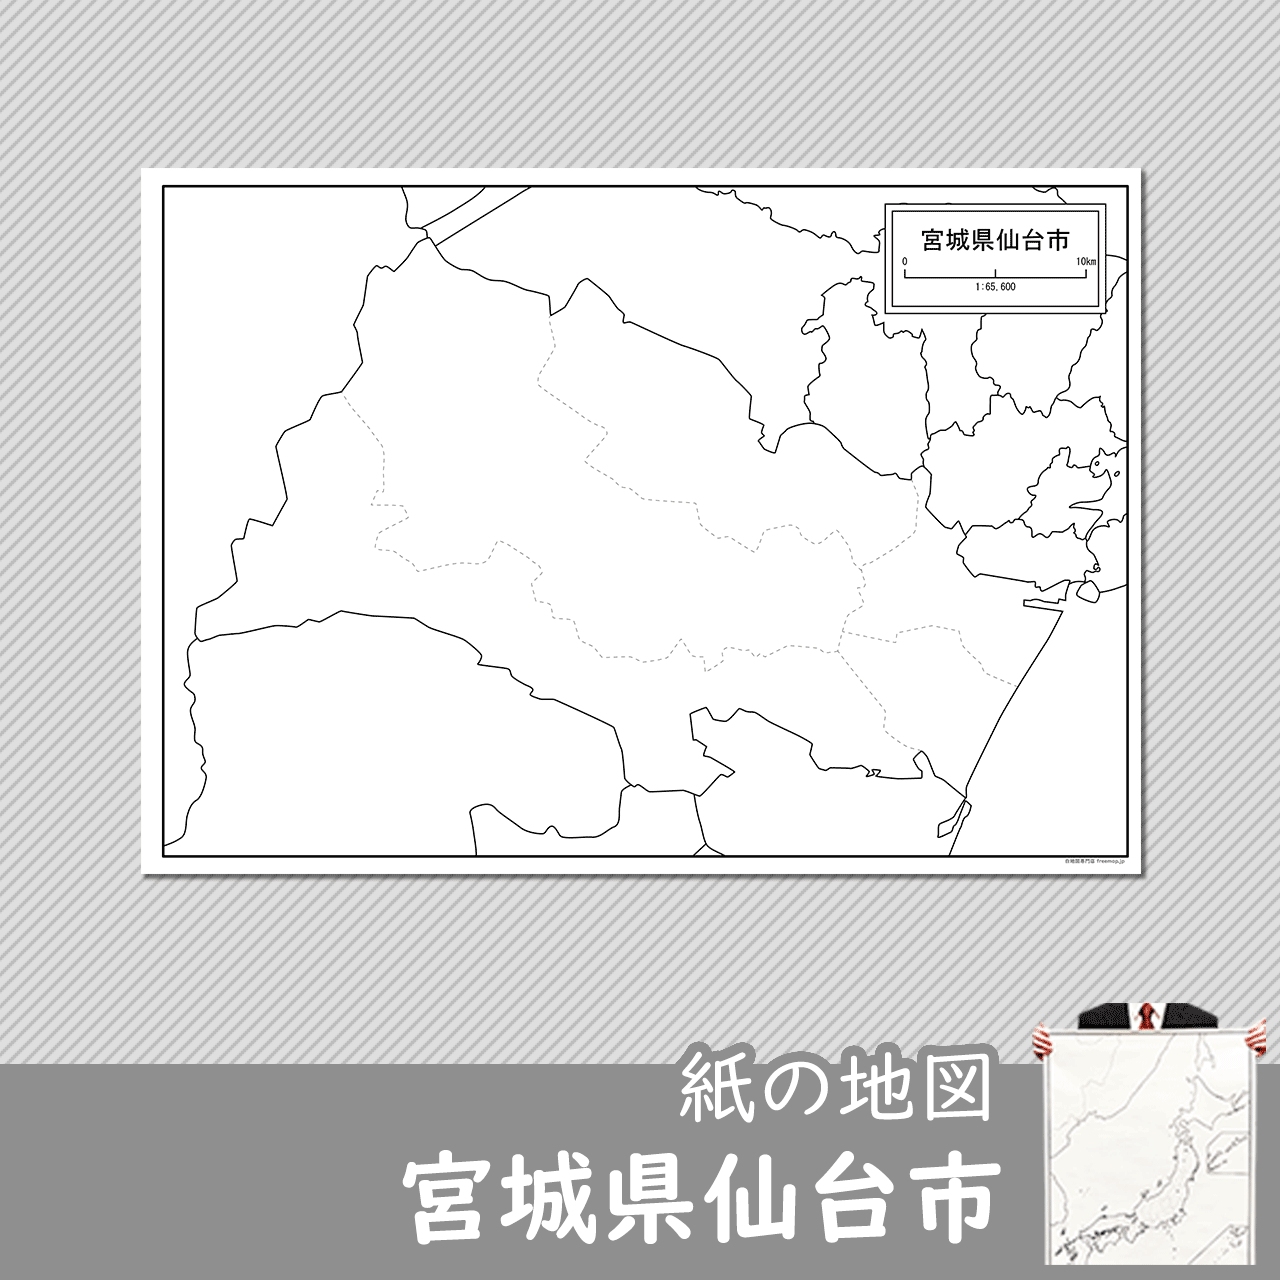 仙台市の白地図 白地図専門店